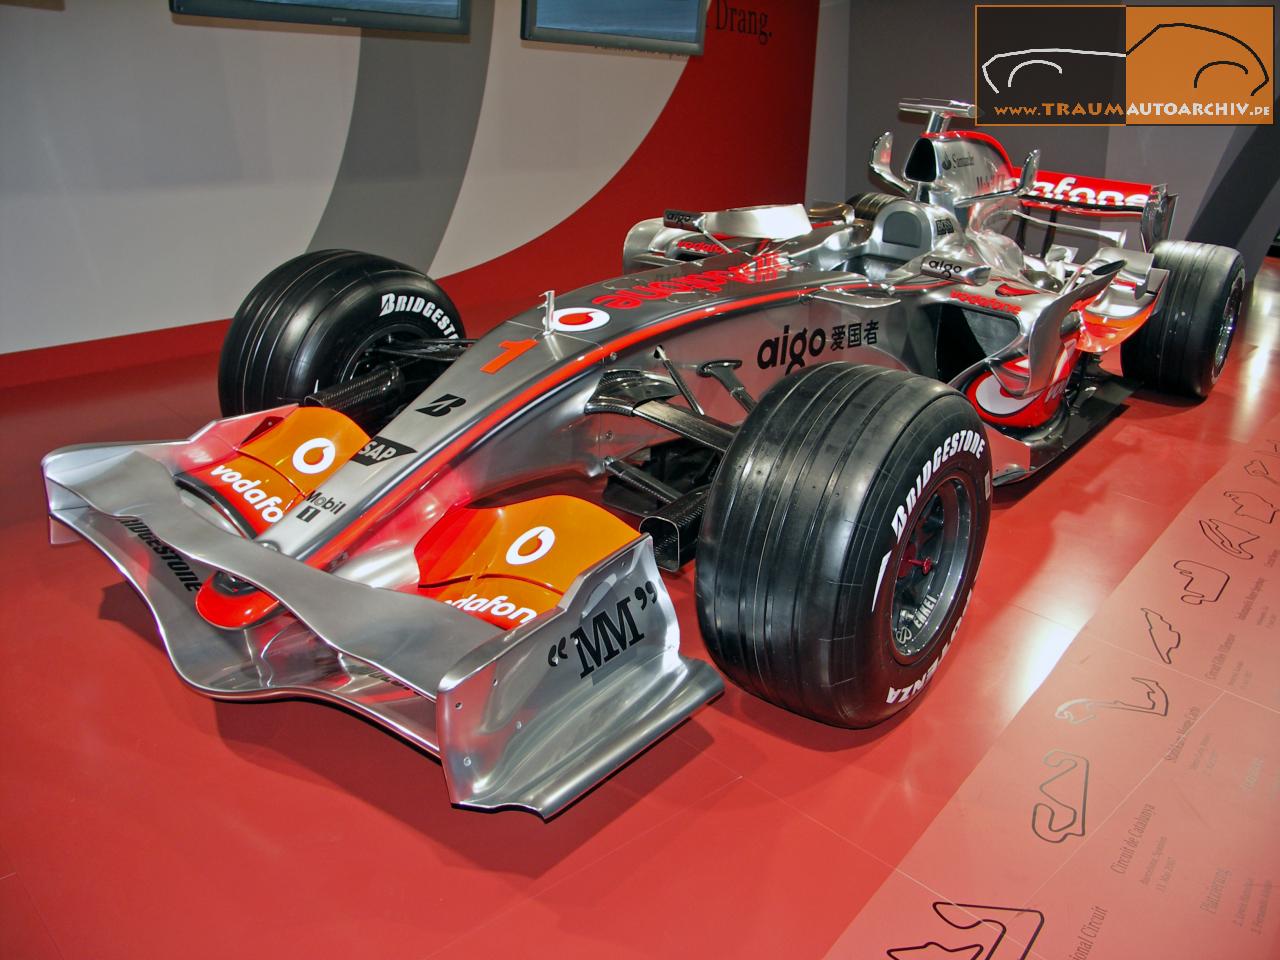 XF1_McLaren-Mercedes MP 4-22 '2007.jpg 140.0K